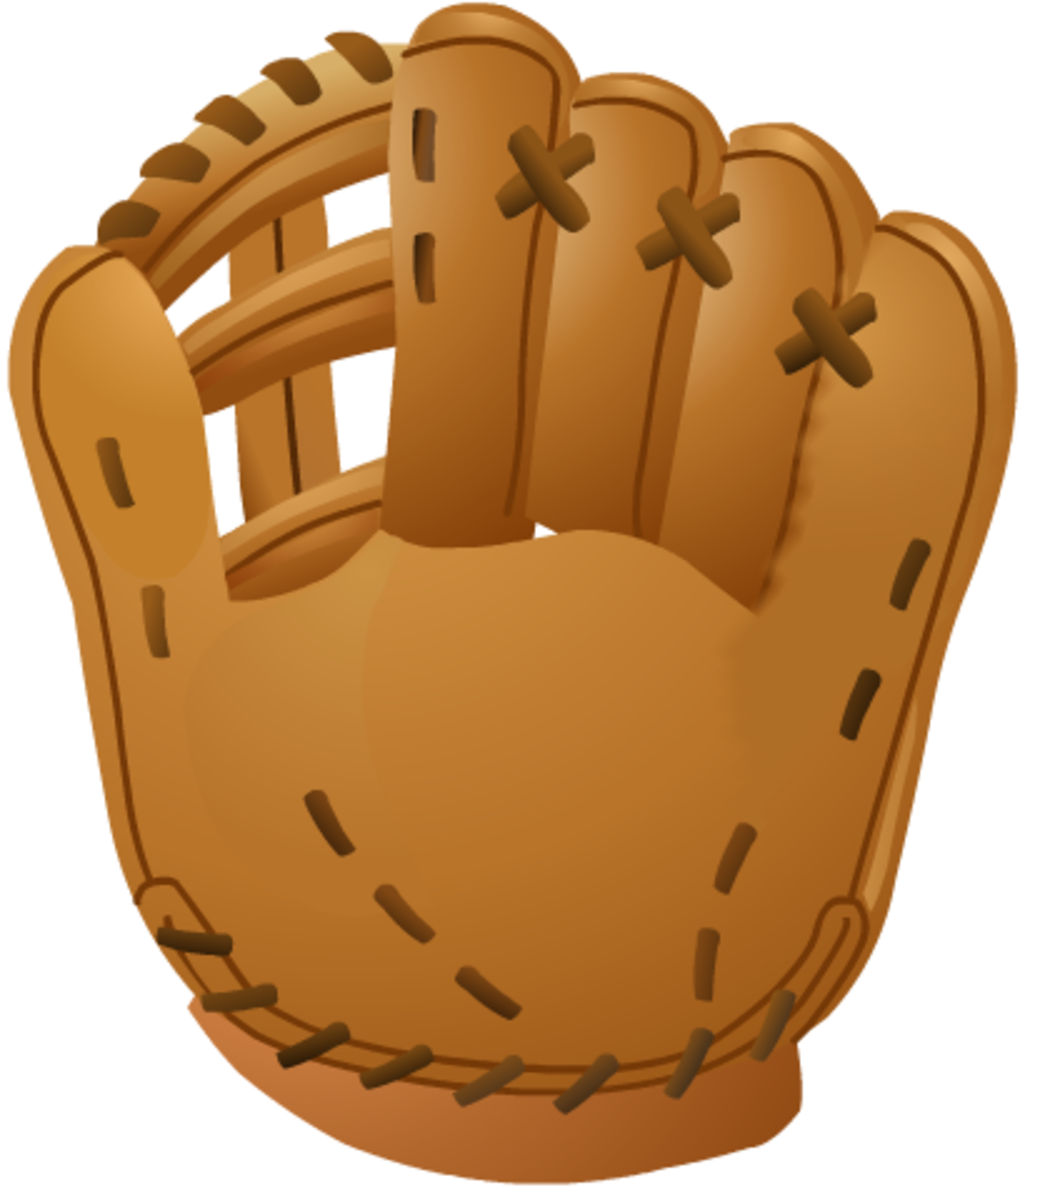 Free Softball and Baseball Clip Art | HubPages